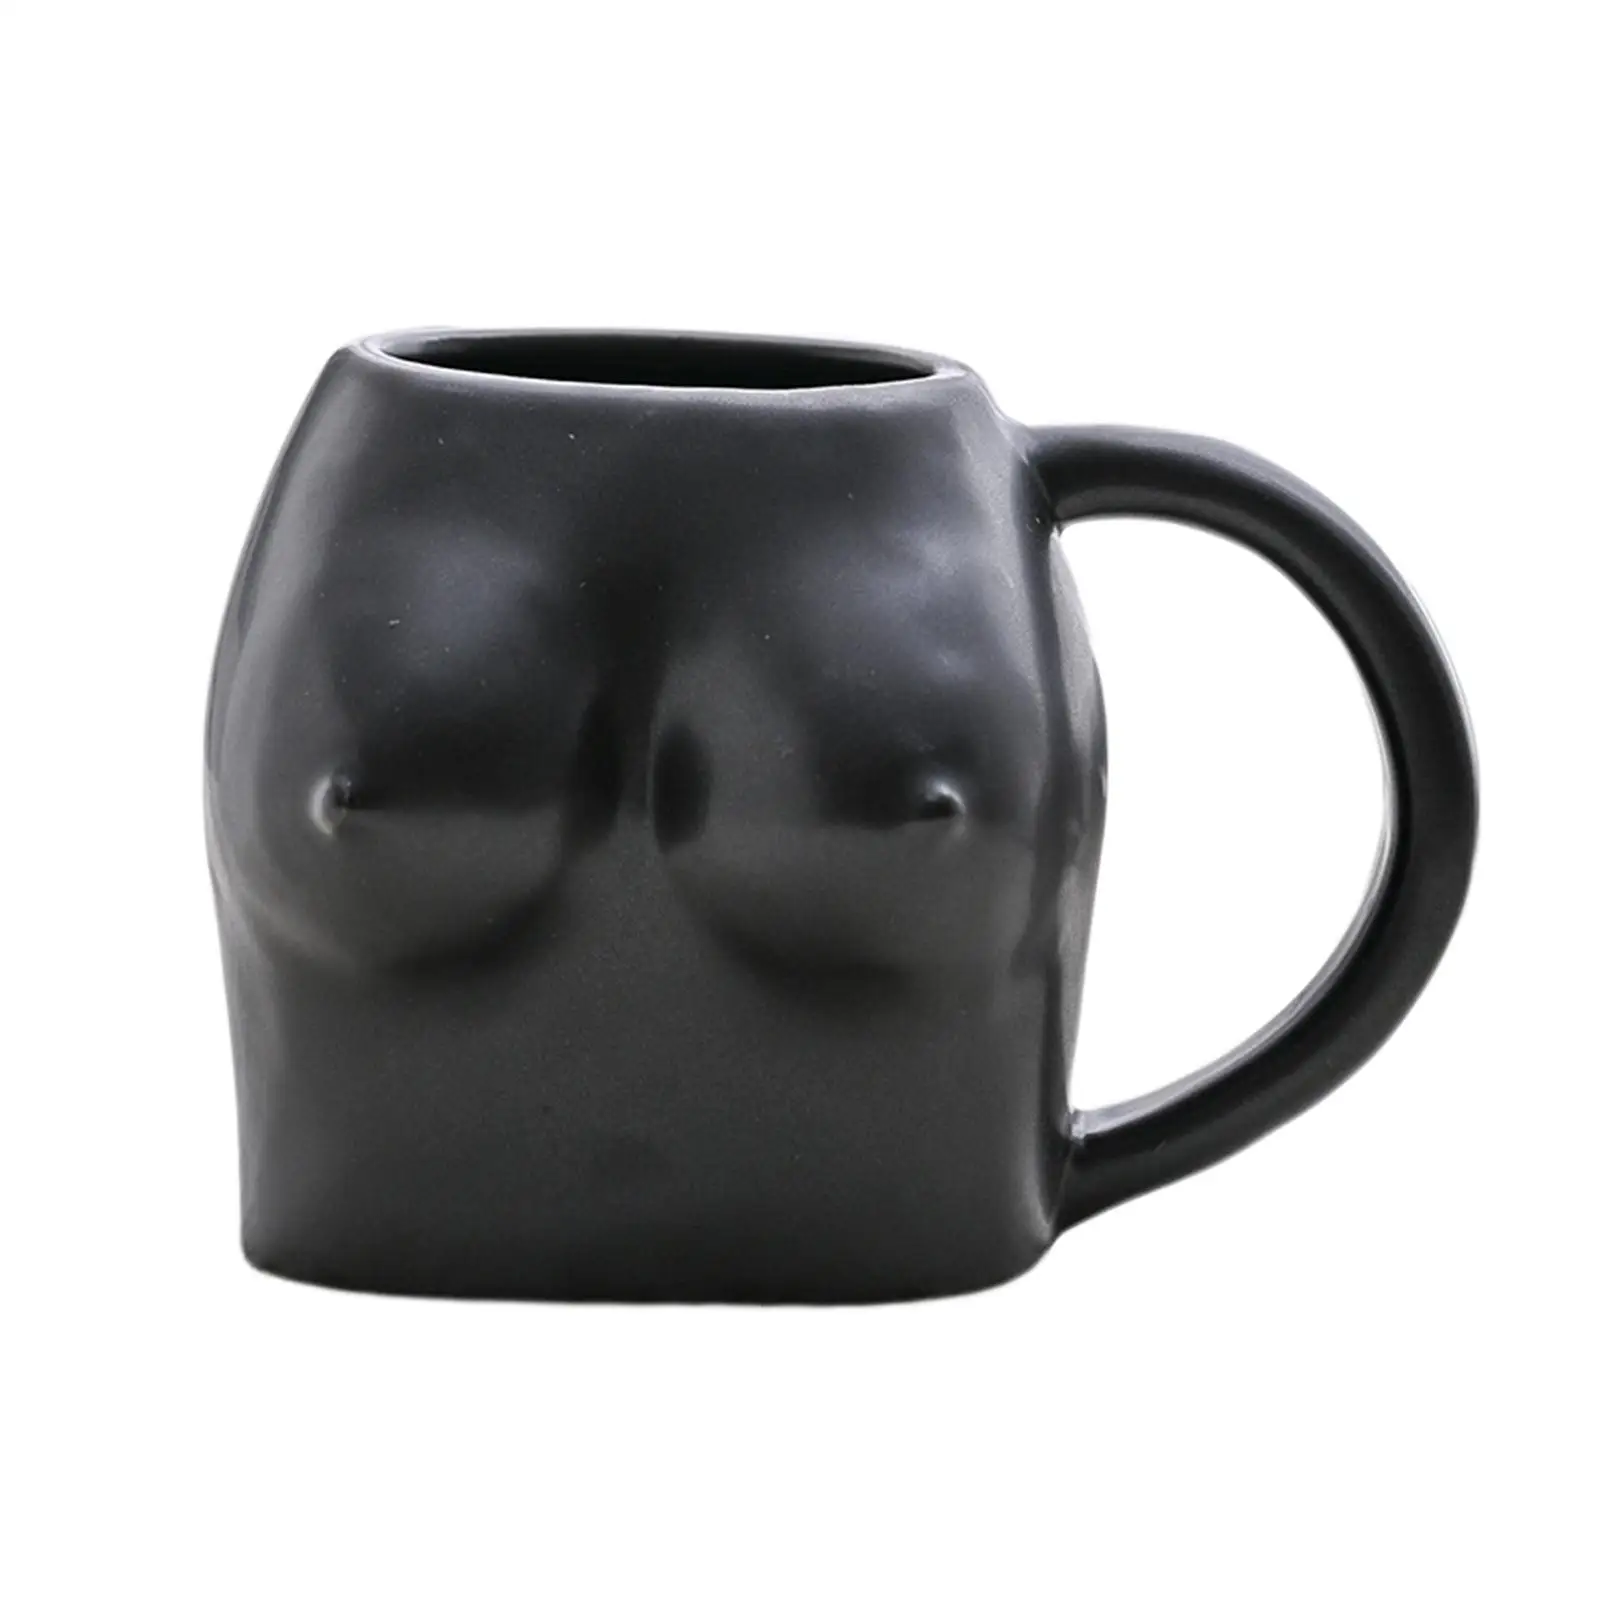 Creative Coffee Mug Household Milk Mug Ceramic Female Body Art Drinking Cup for